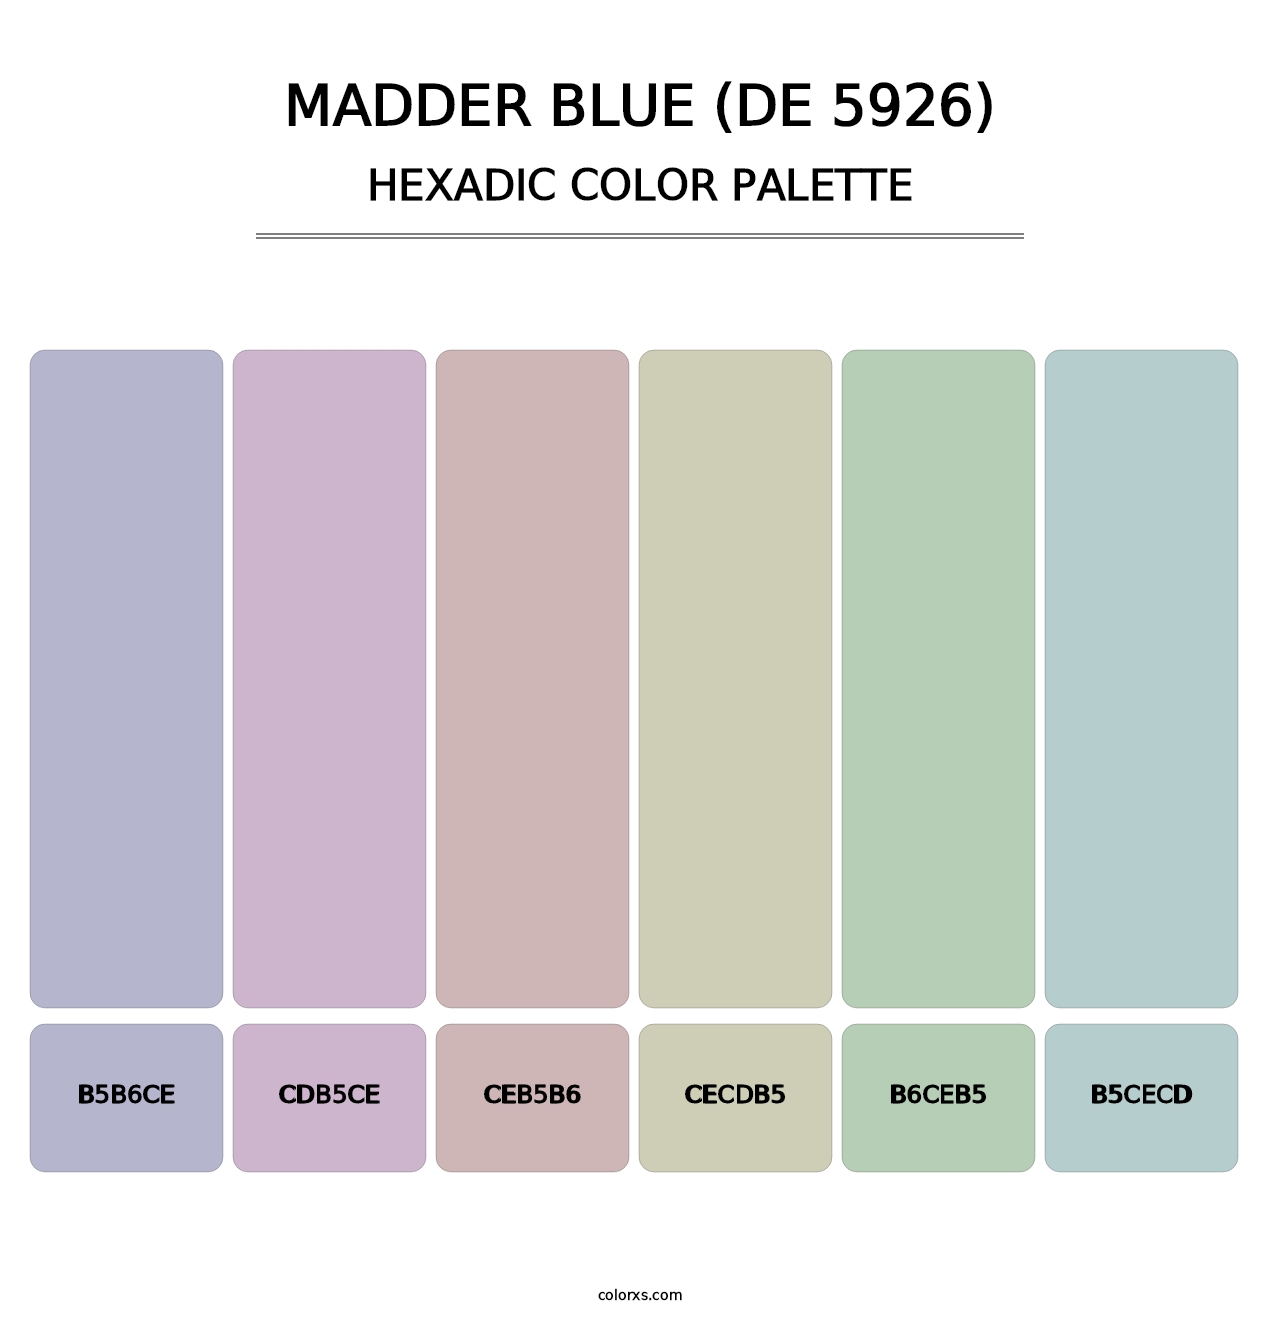 Madder Blue (DE 5926) - Hexadic Color Palette